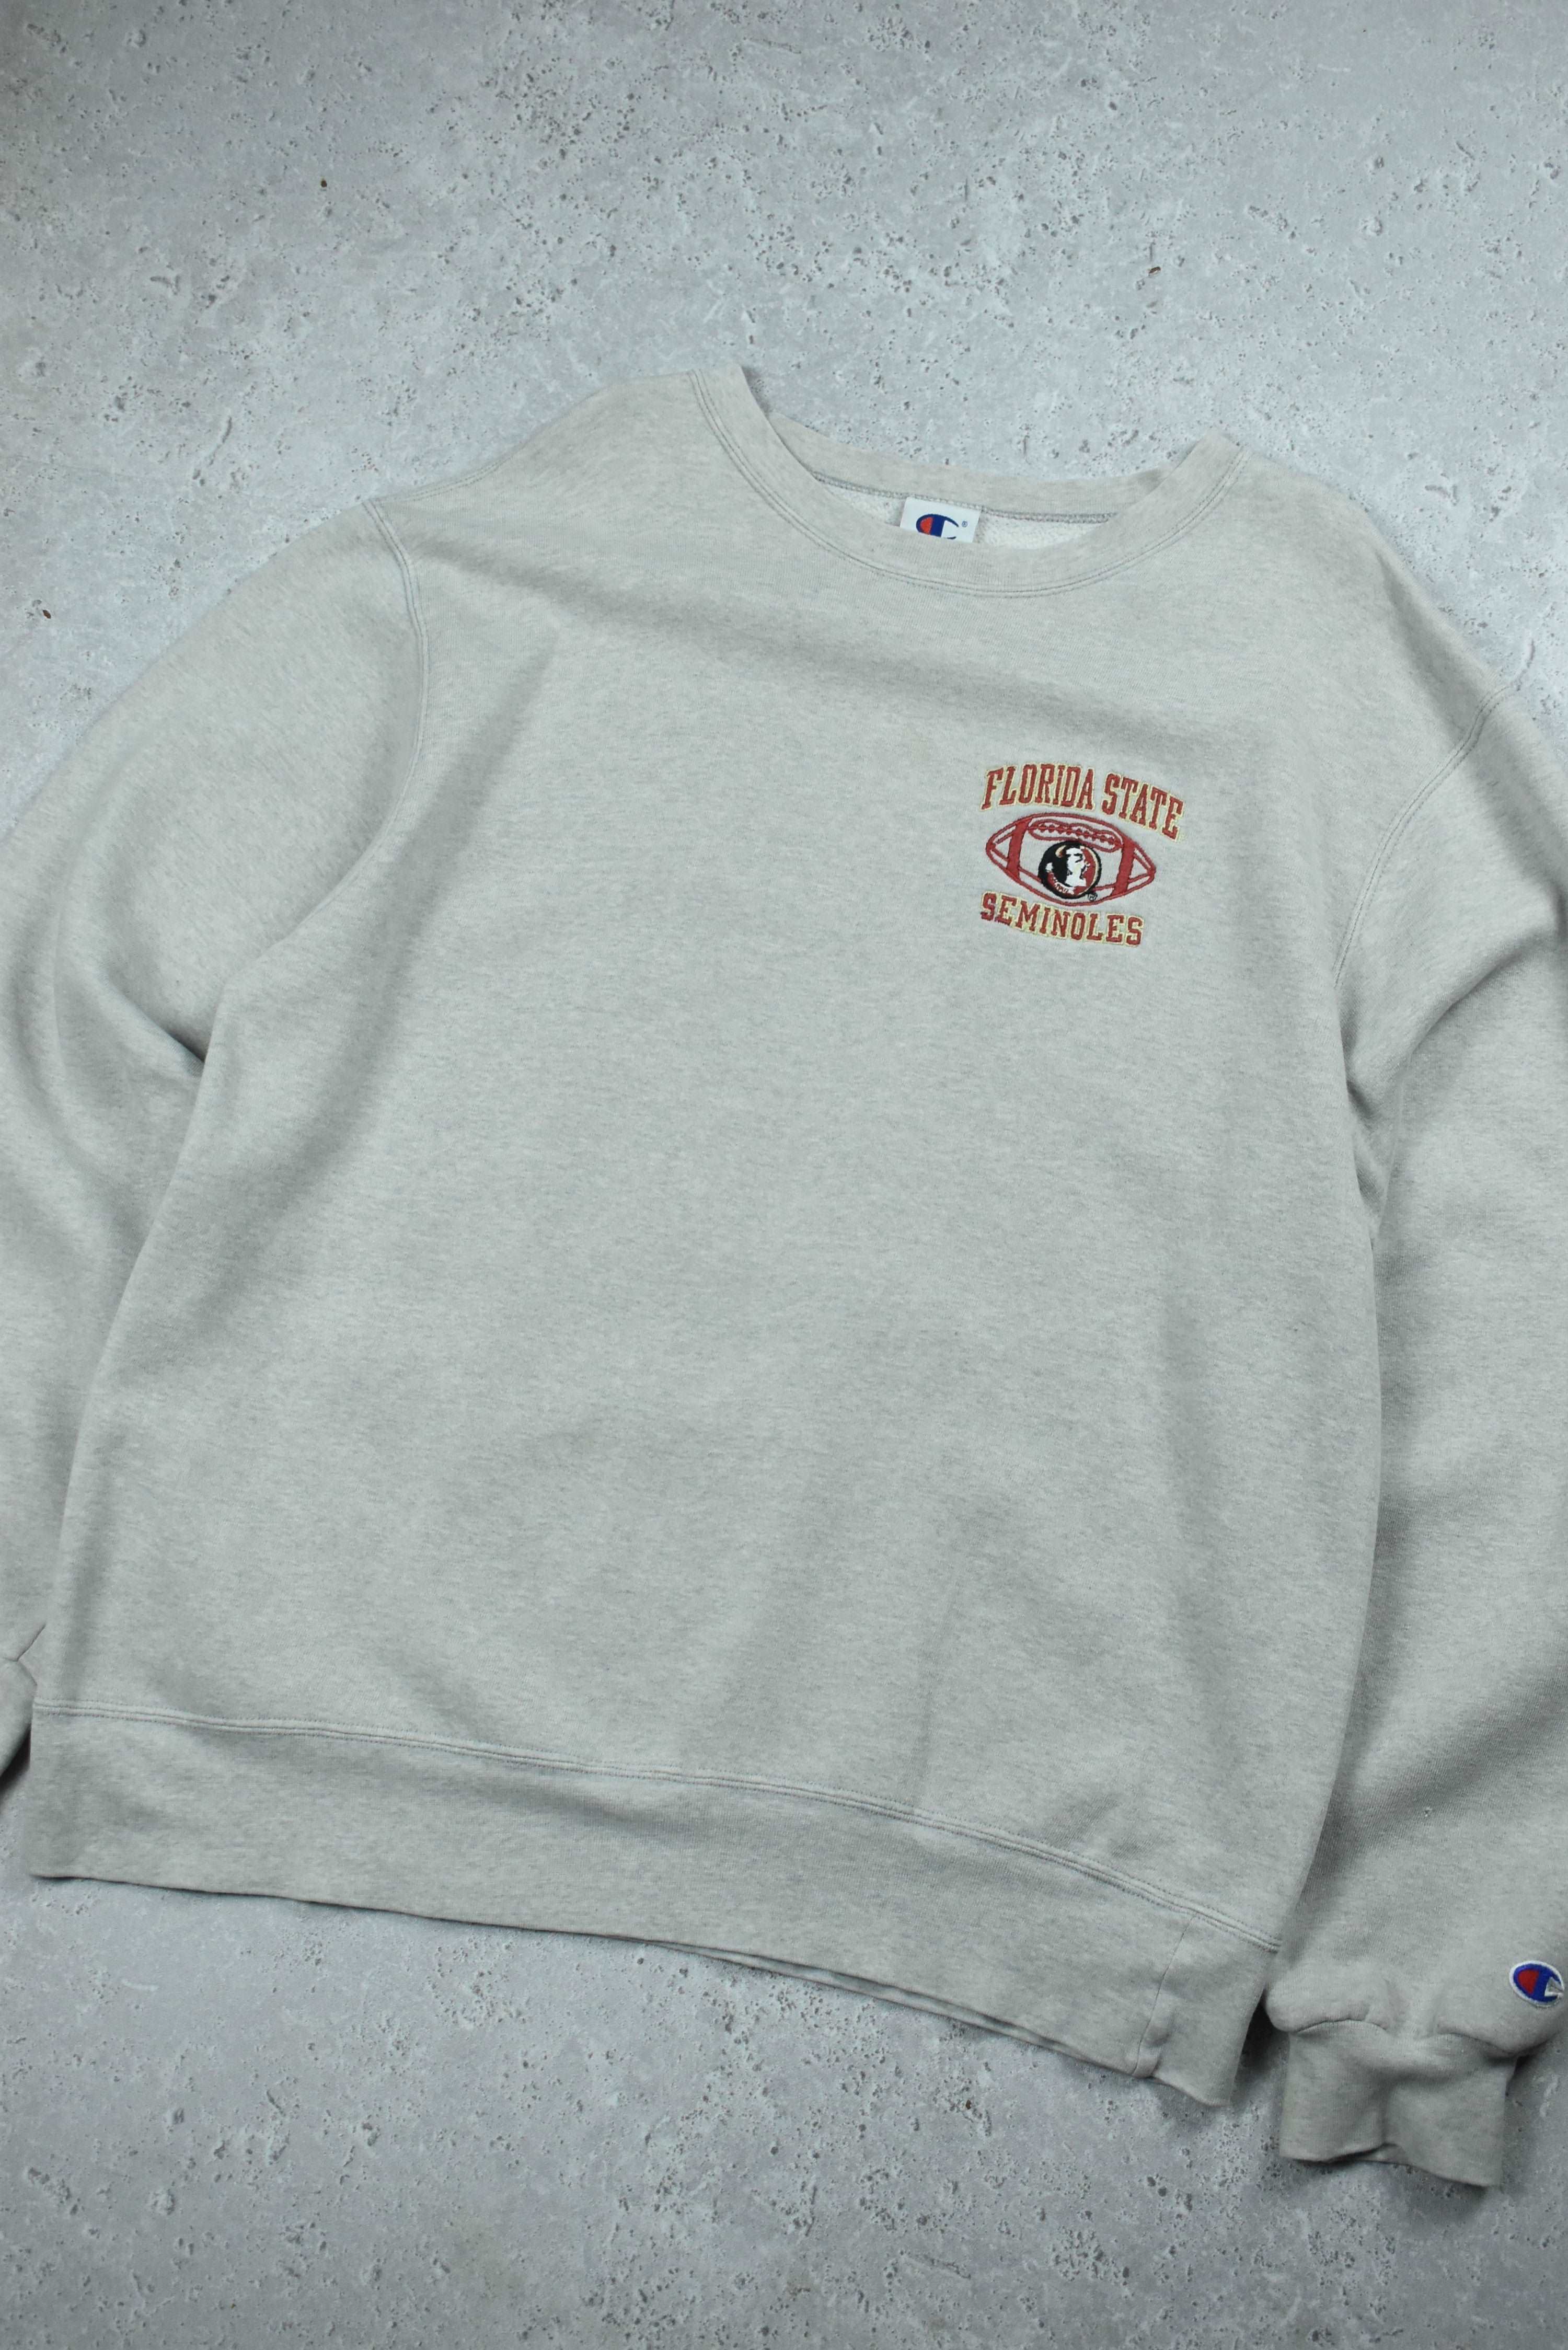 Vintage Champion Florida State Embroidery Sweatshirt Large